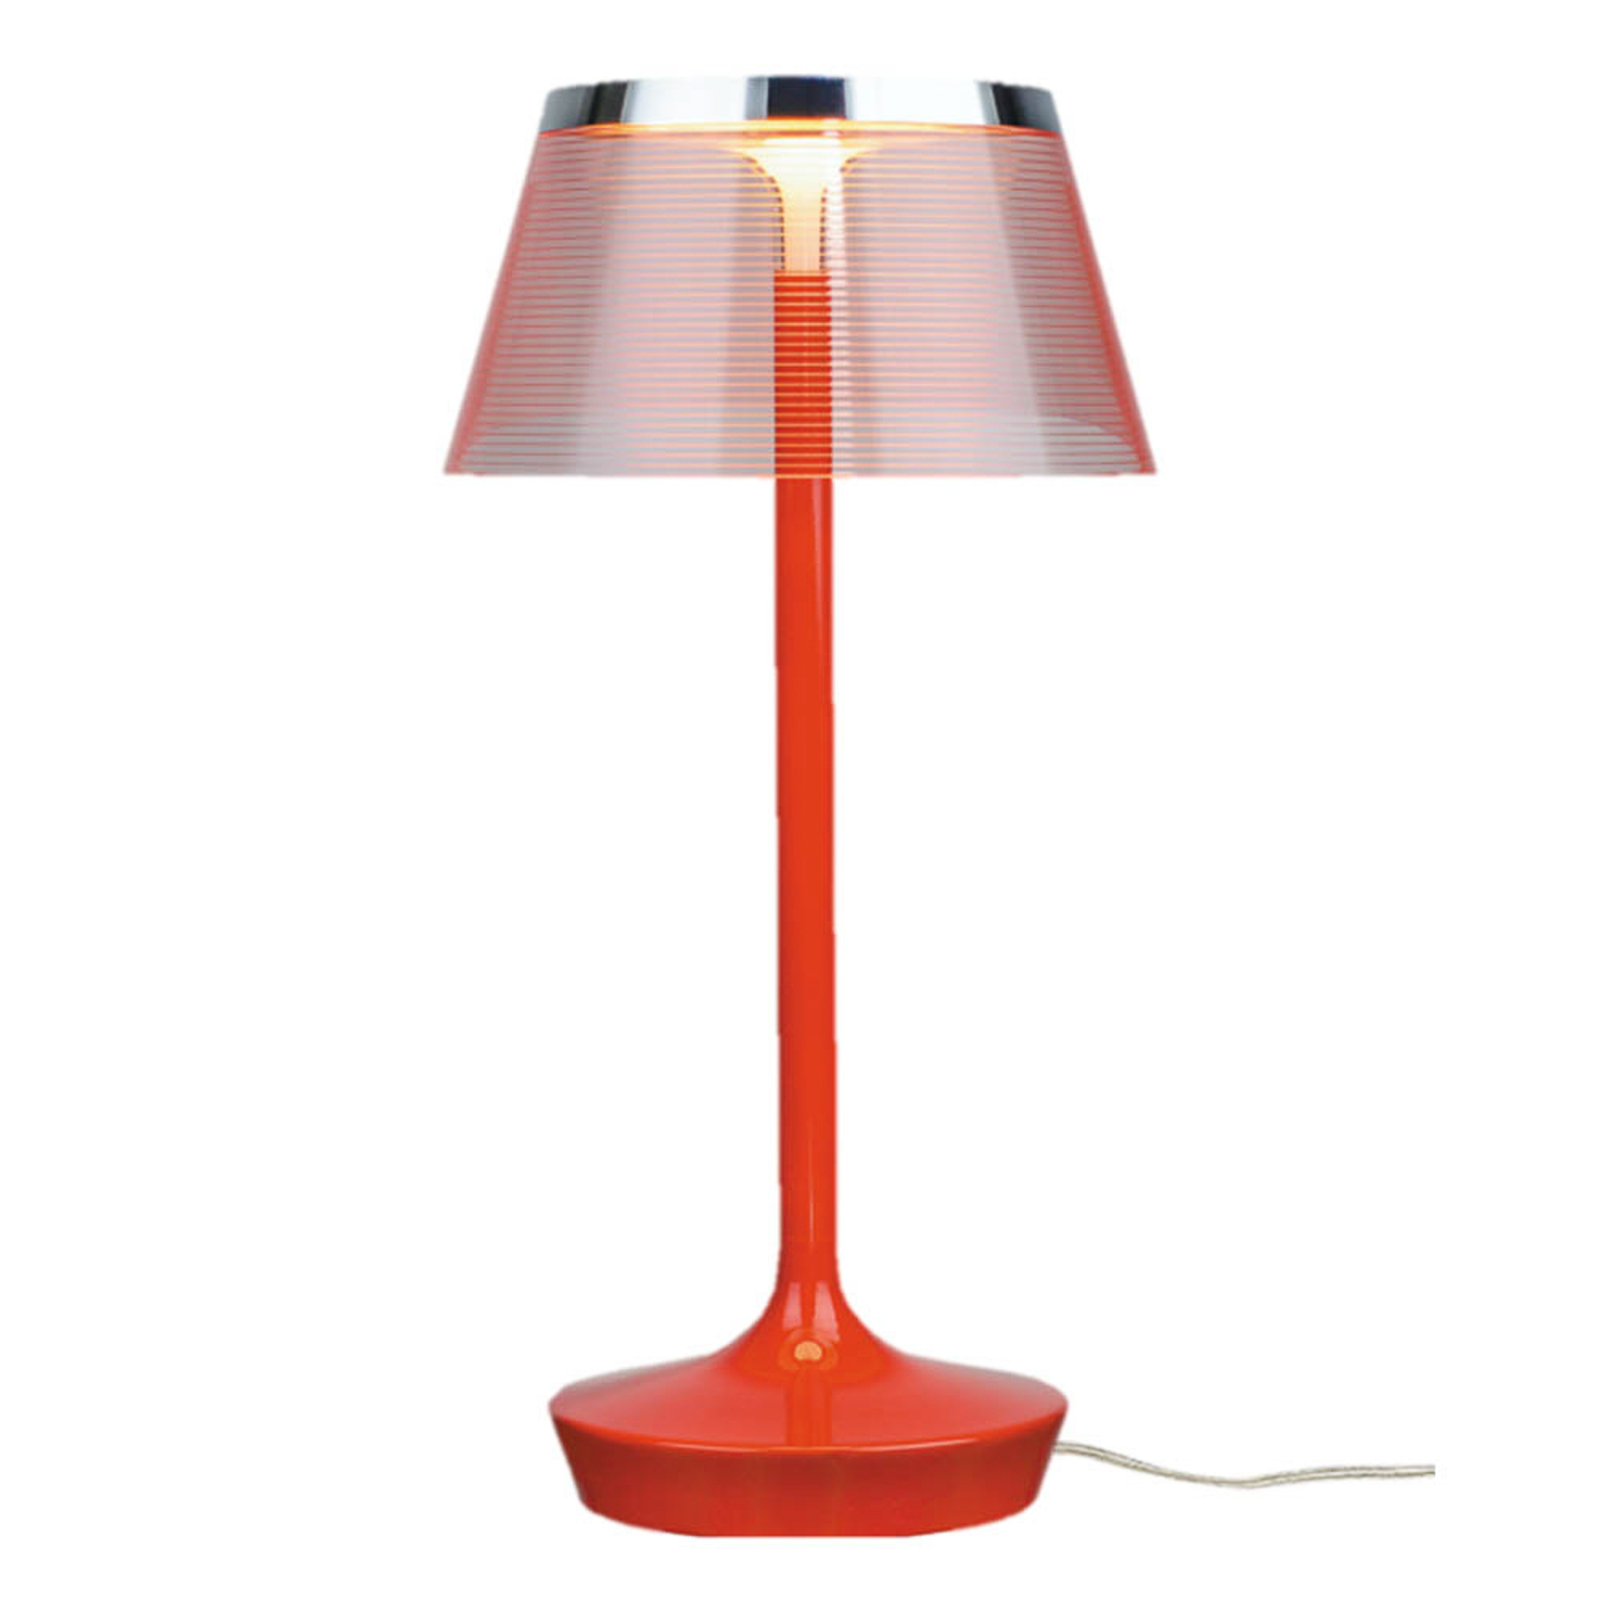 Aluminor La Petite Lampe LED table lamp, red